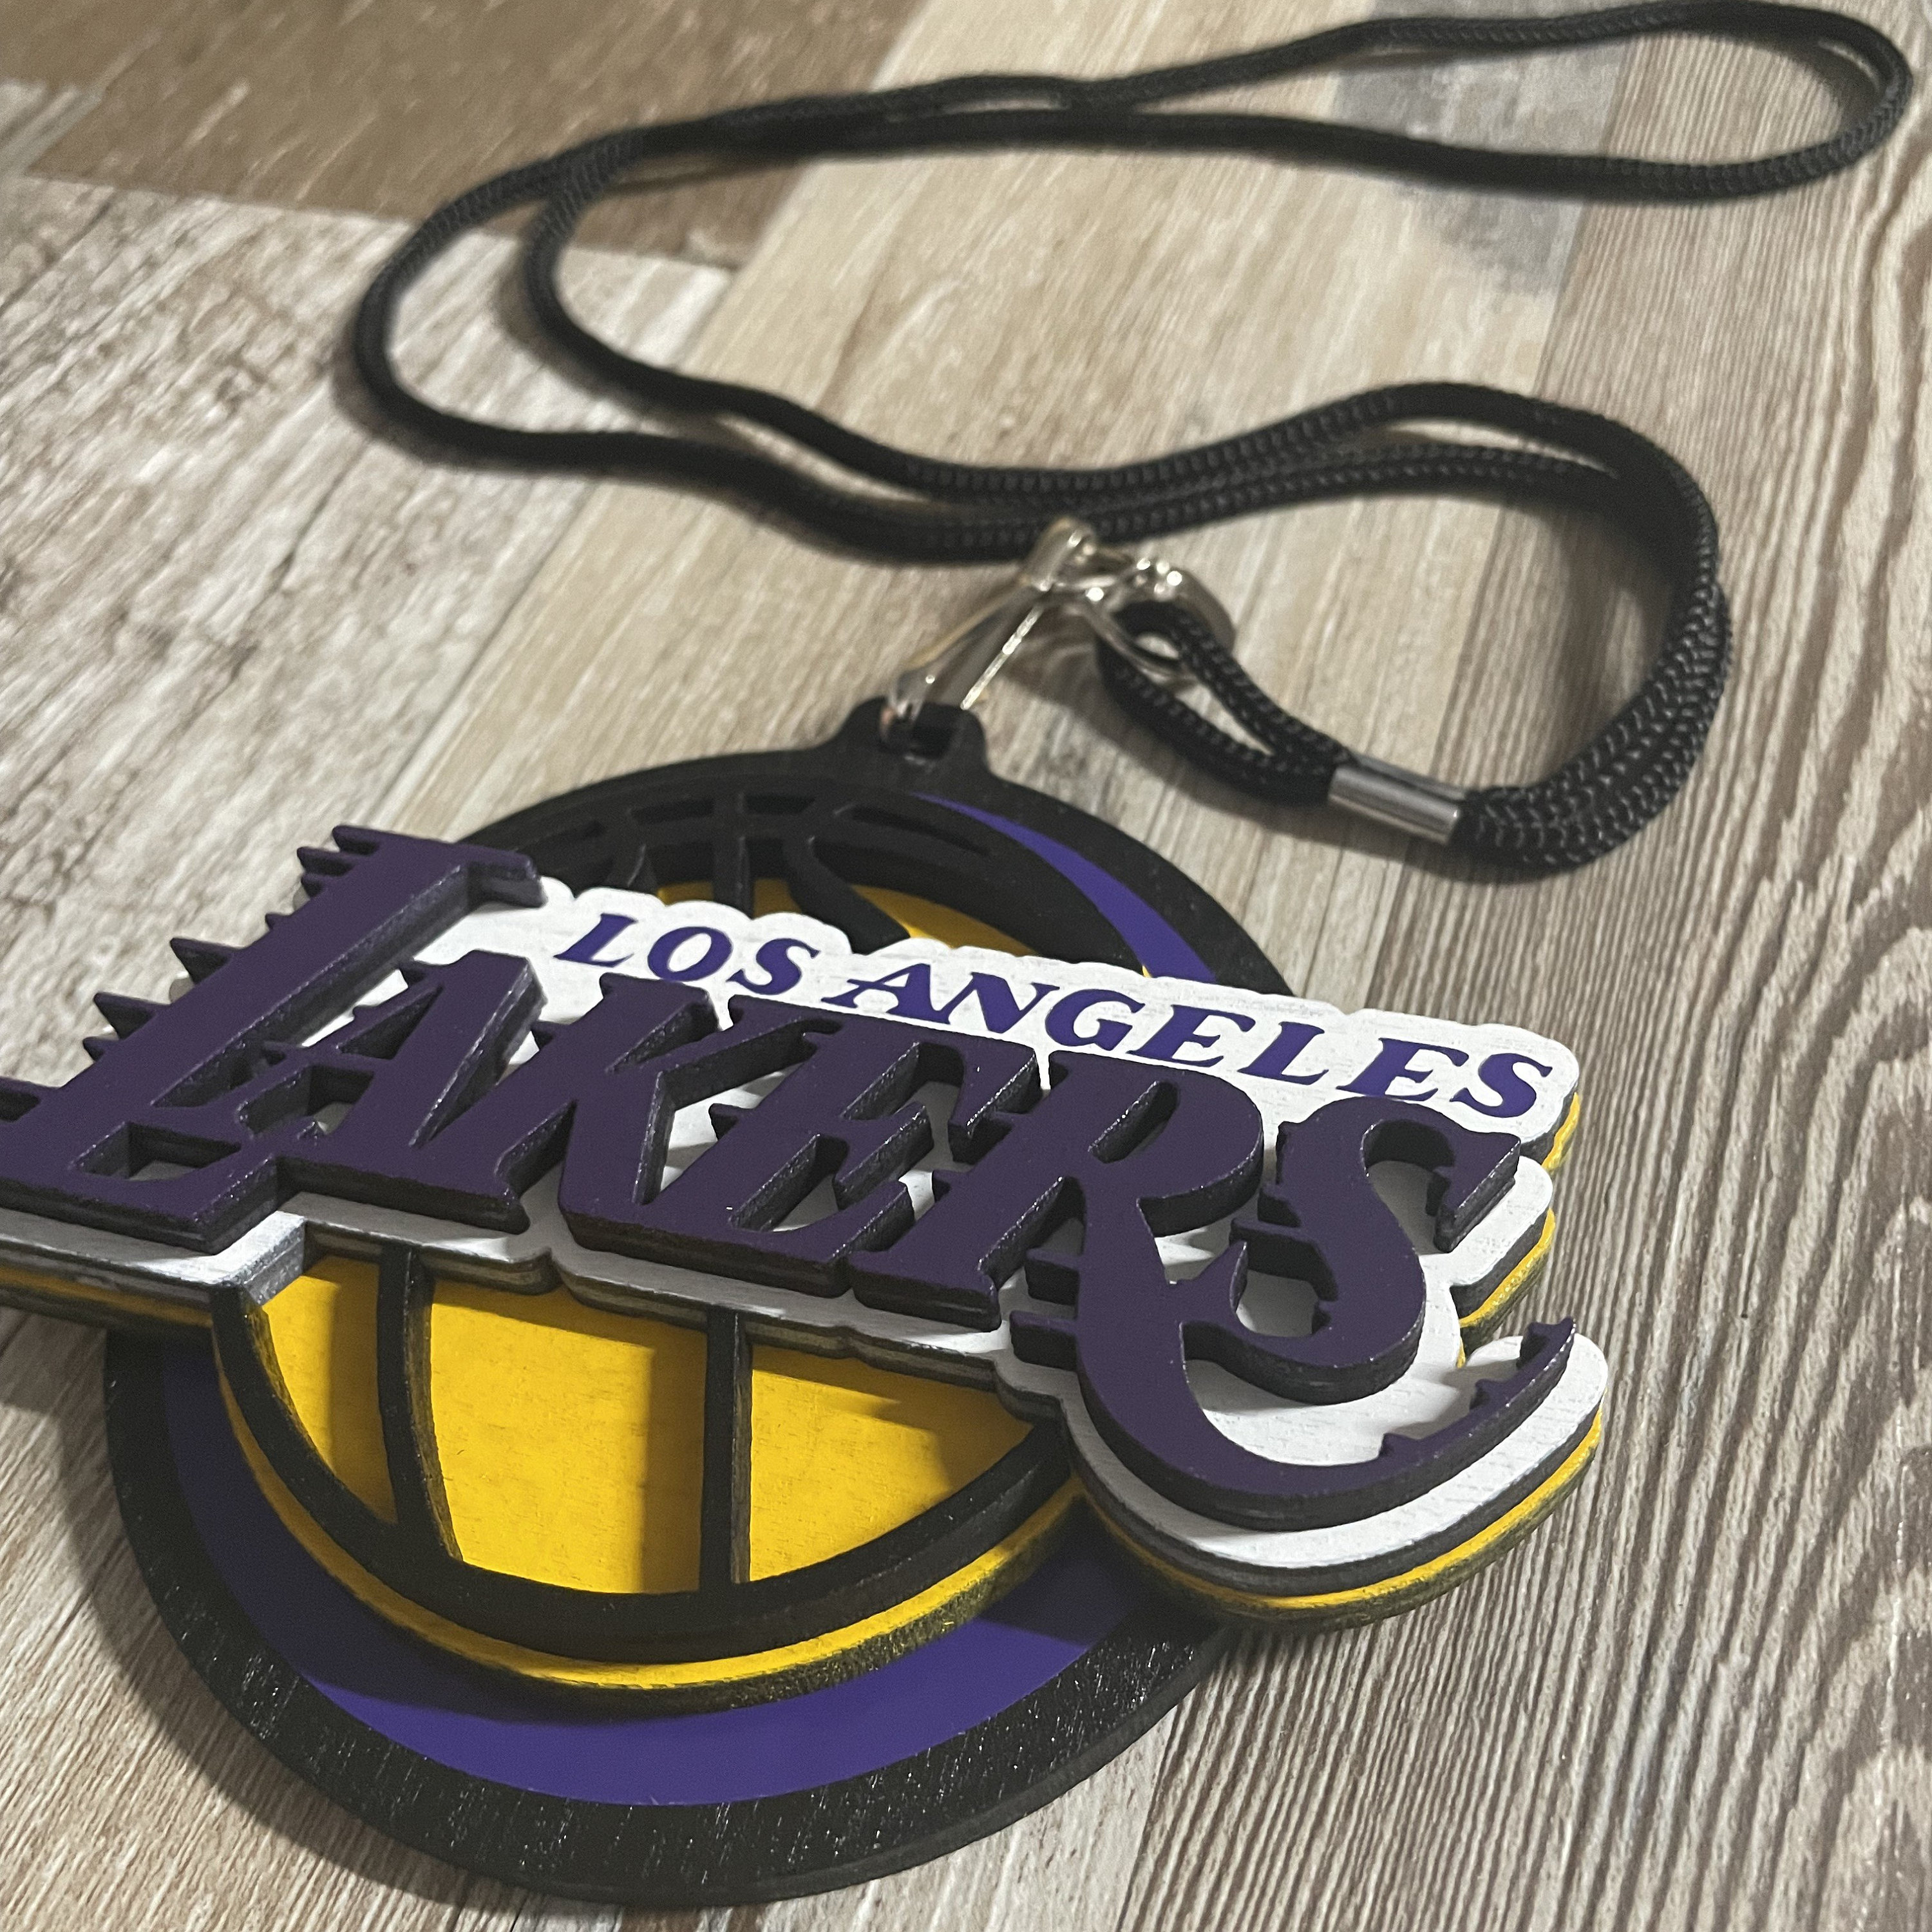 Wholesale NBA Los Angeles Lakers - Keychain (KC) Carabiner Lanyard